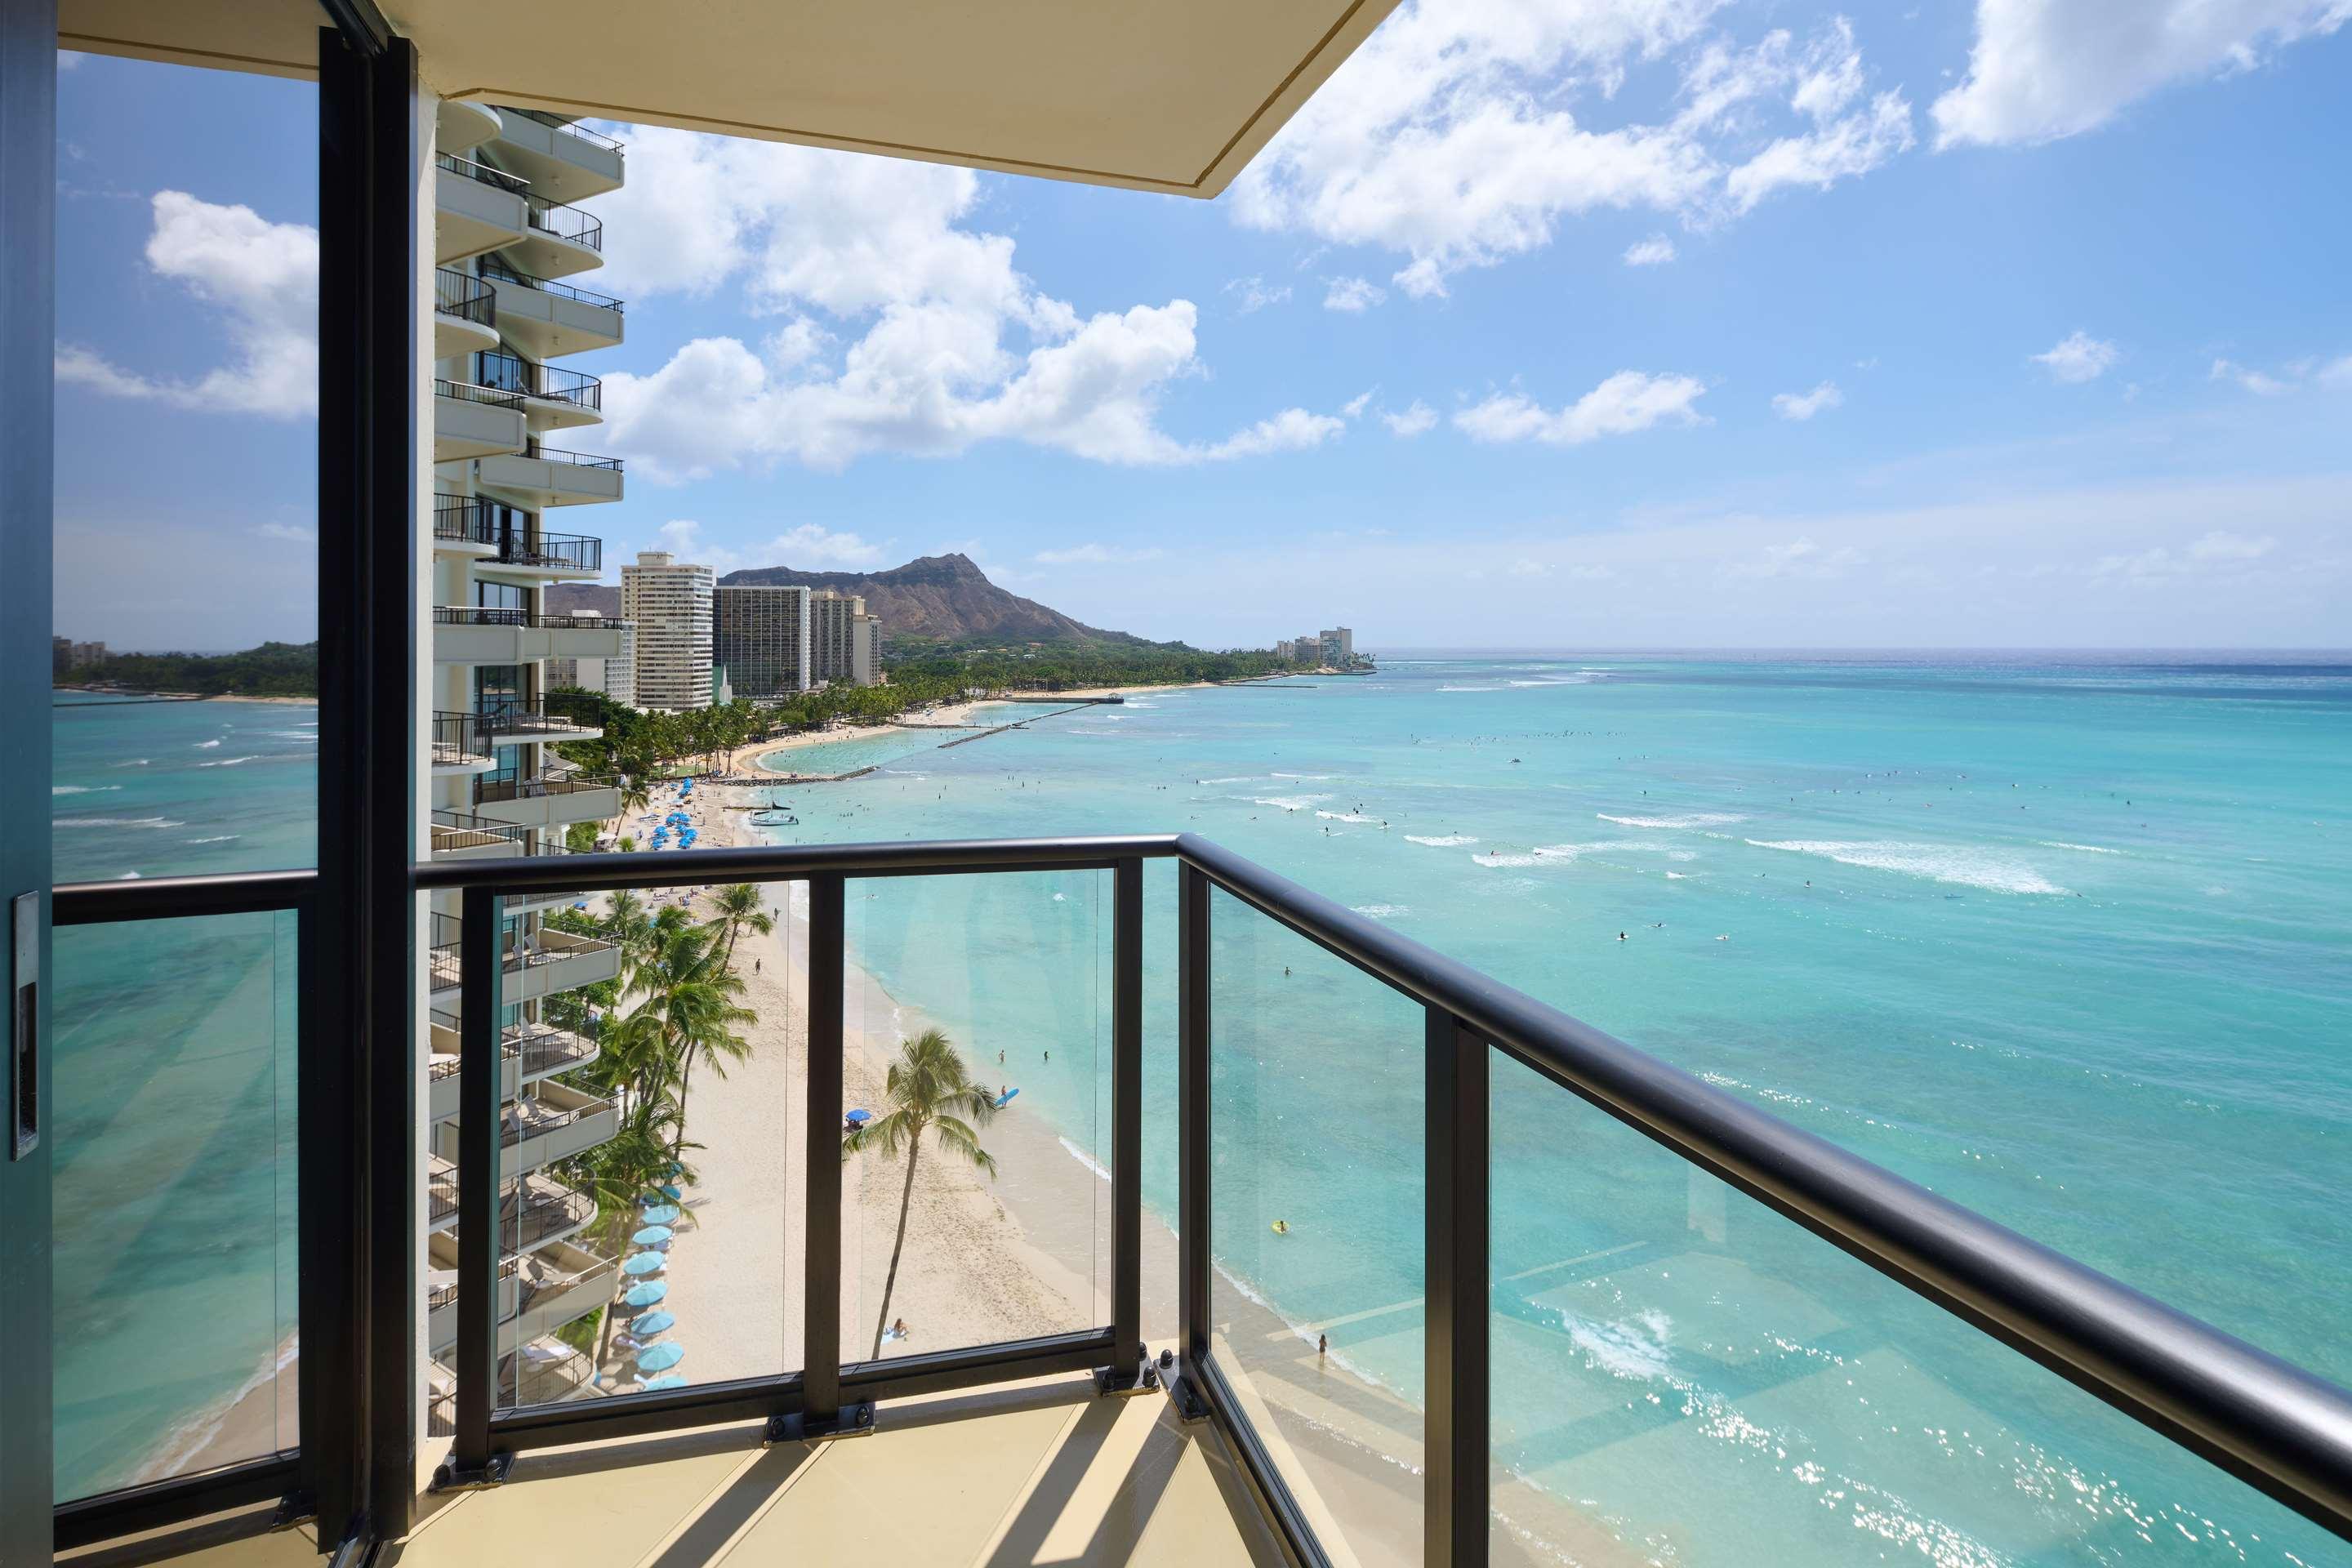 Outrigger Waikiki Beach Resort, Oahu, HI : Five Star Alliance